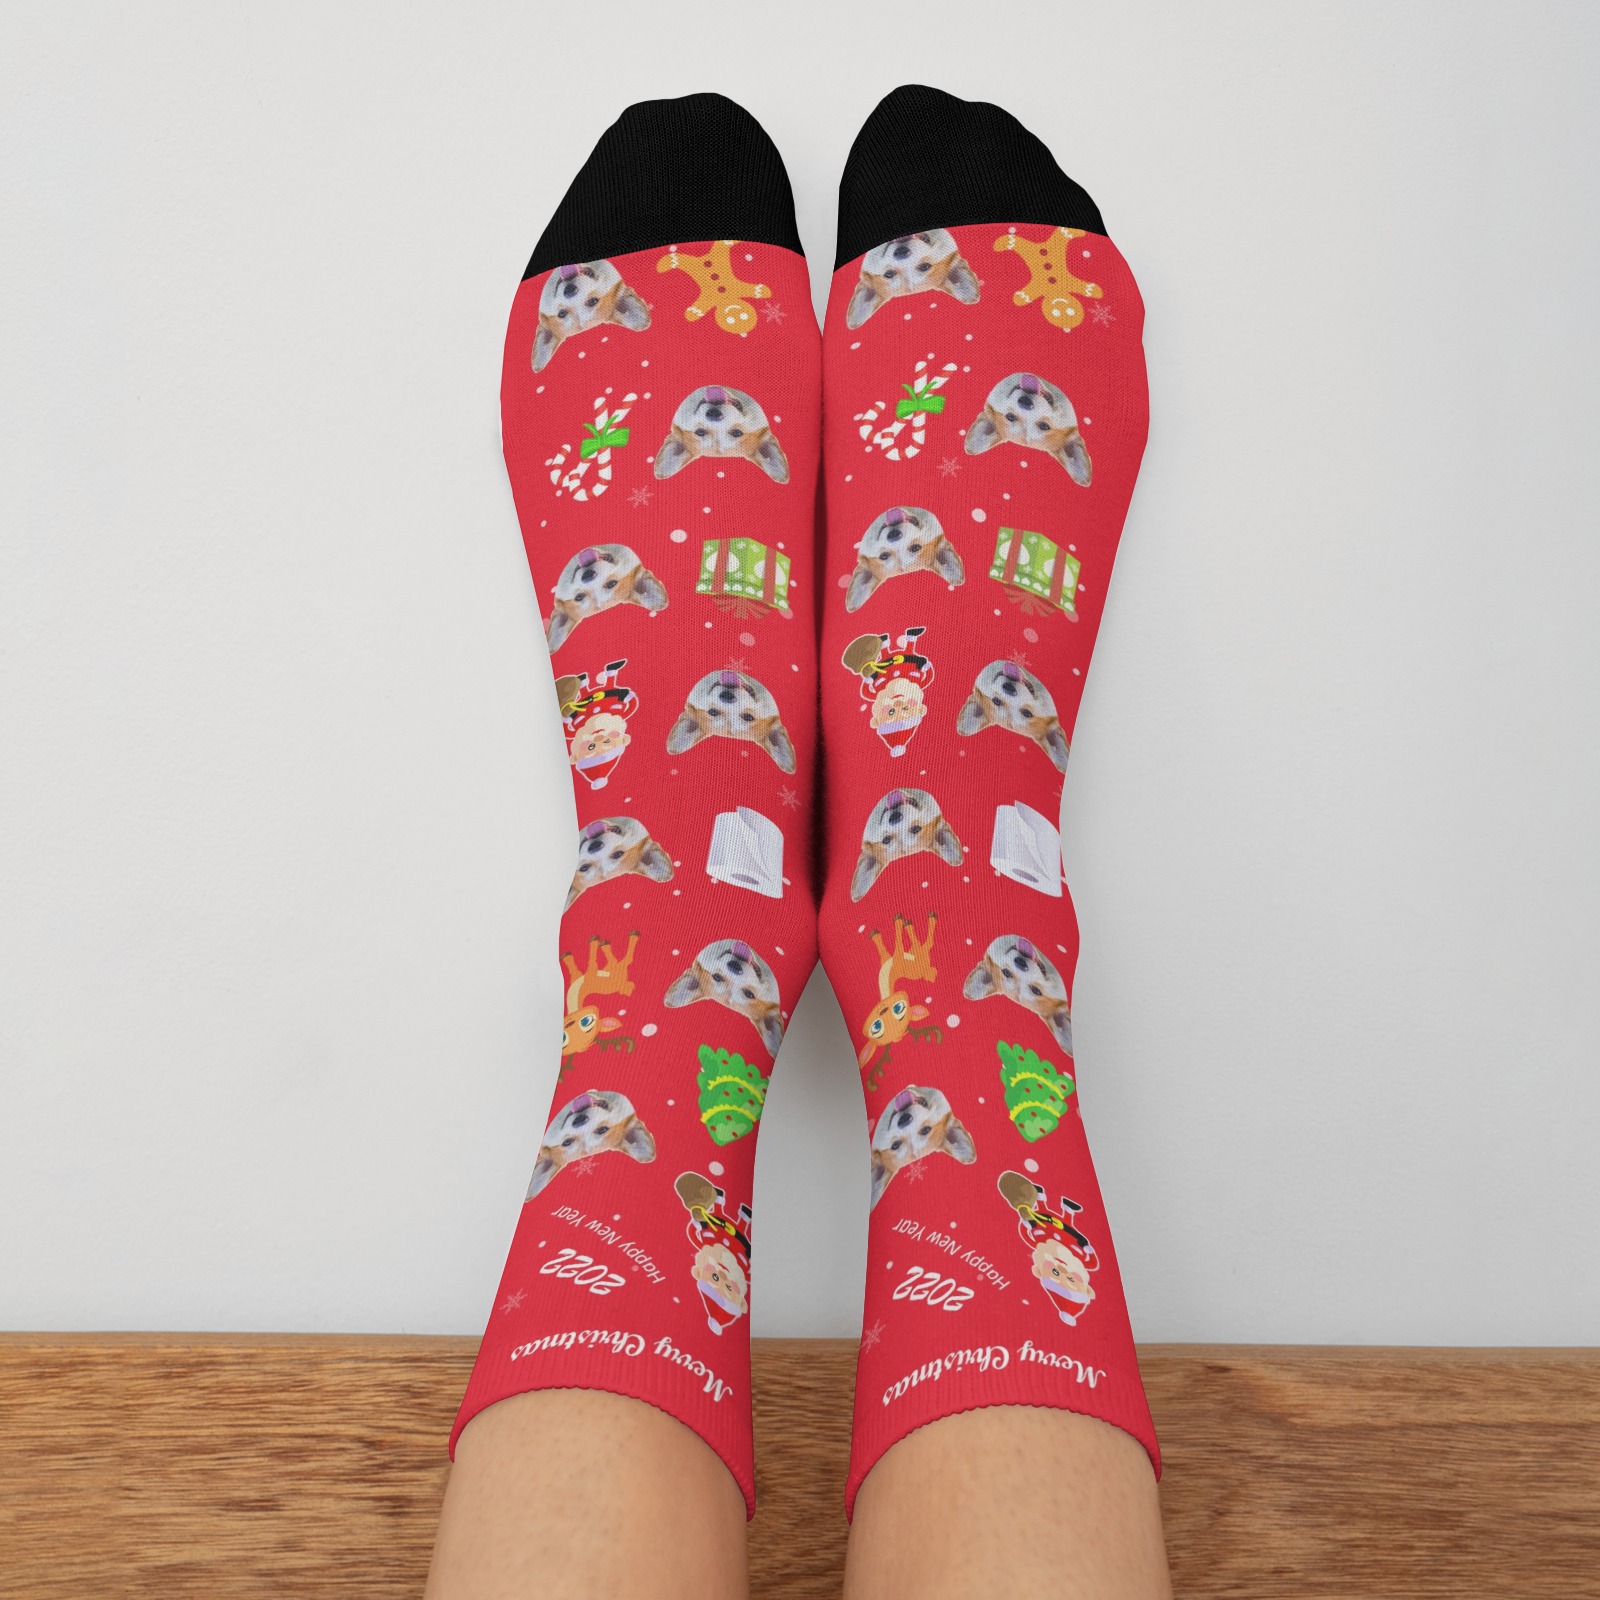 Custom Pet Socks - Personalized Picture Christmas Socks